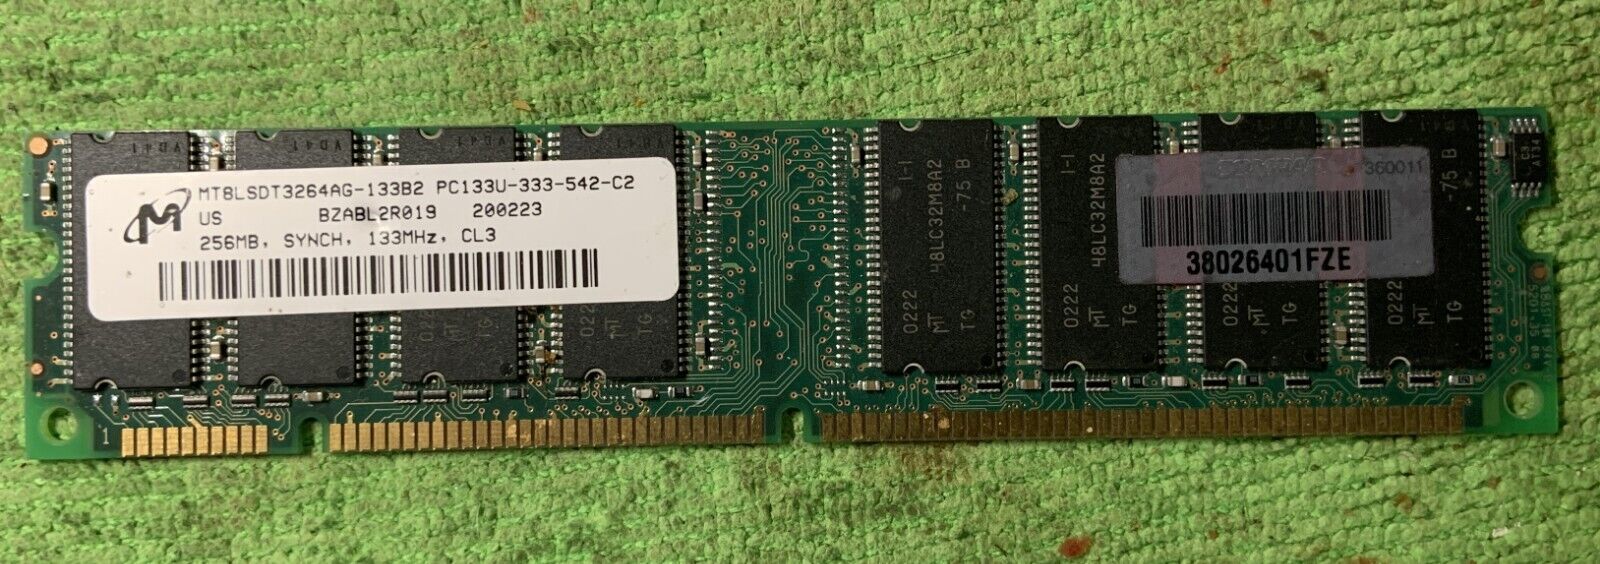 Micron 256 MB DIMM 133 MHz SDRAM Memory (MT8LSDT3264AG-133B2)